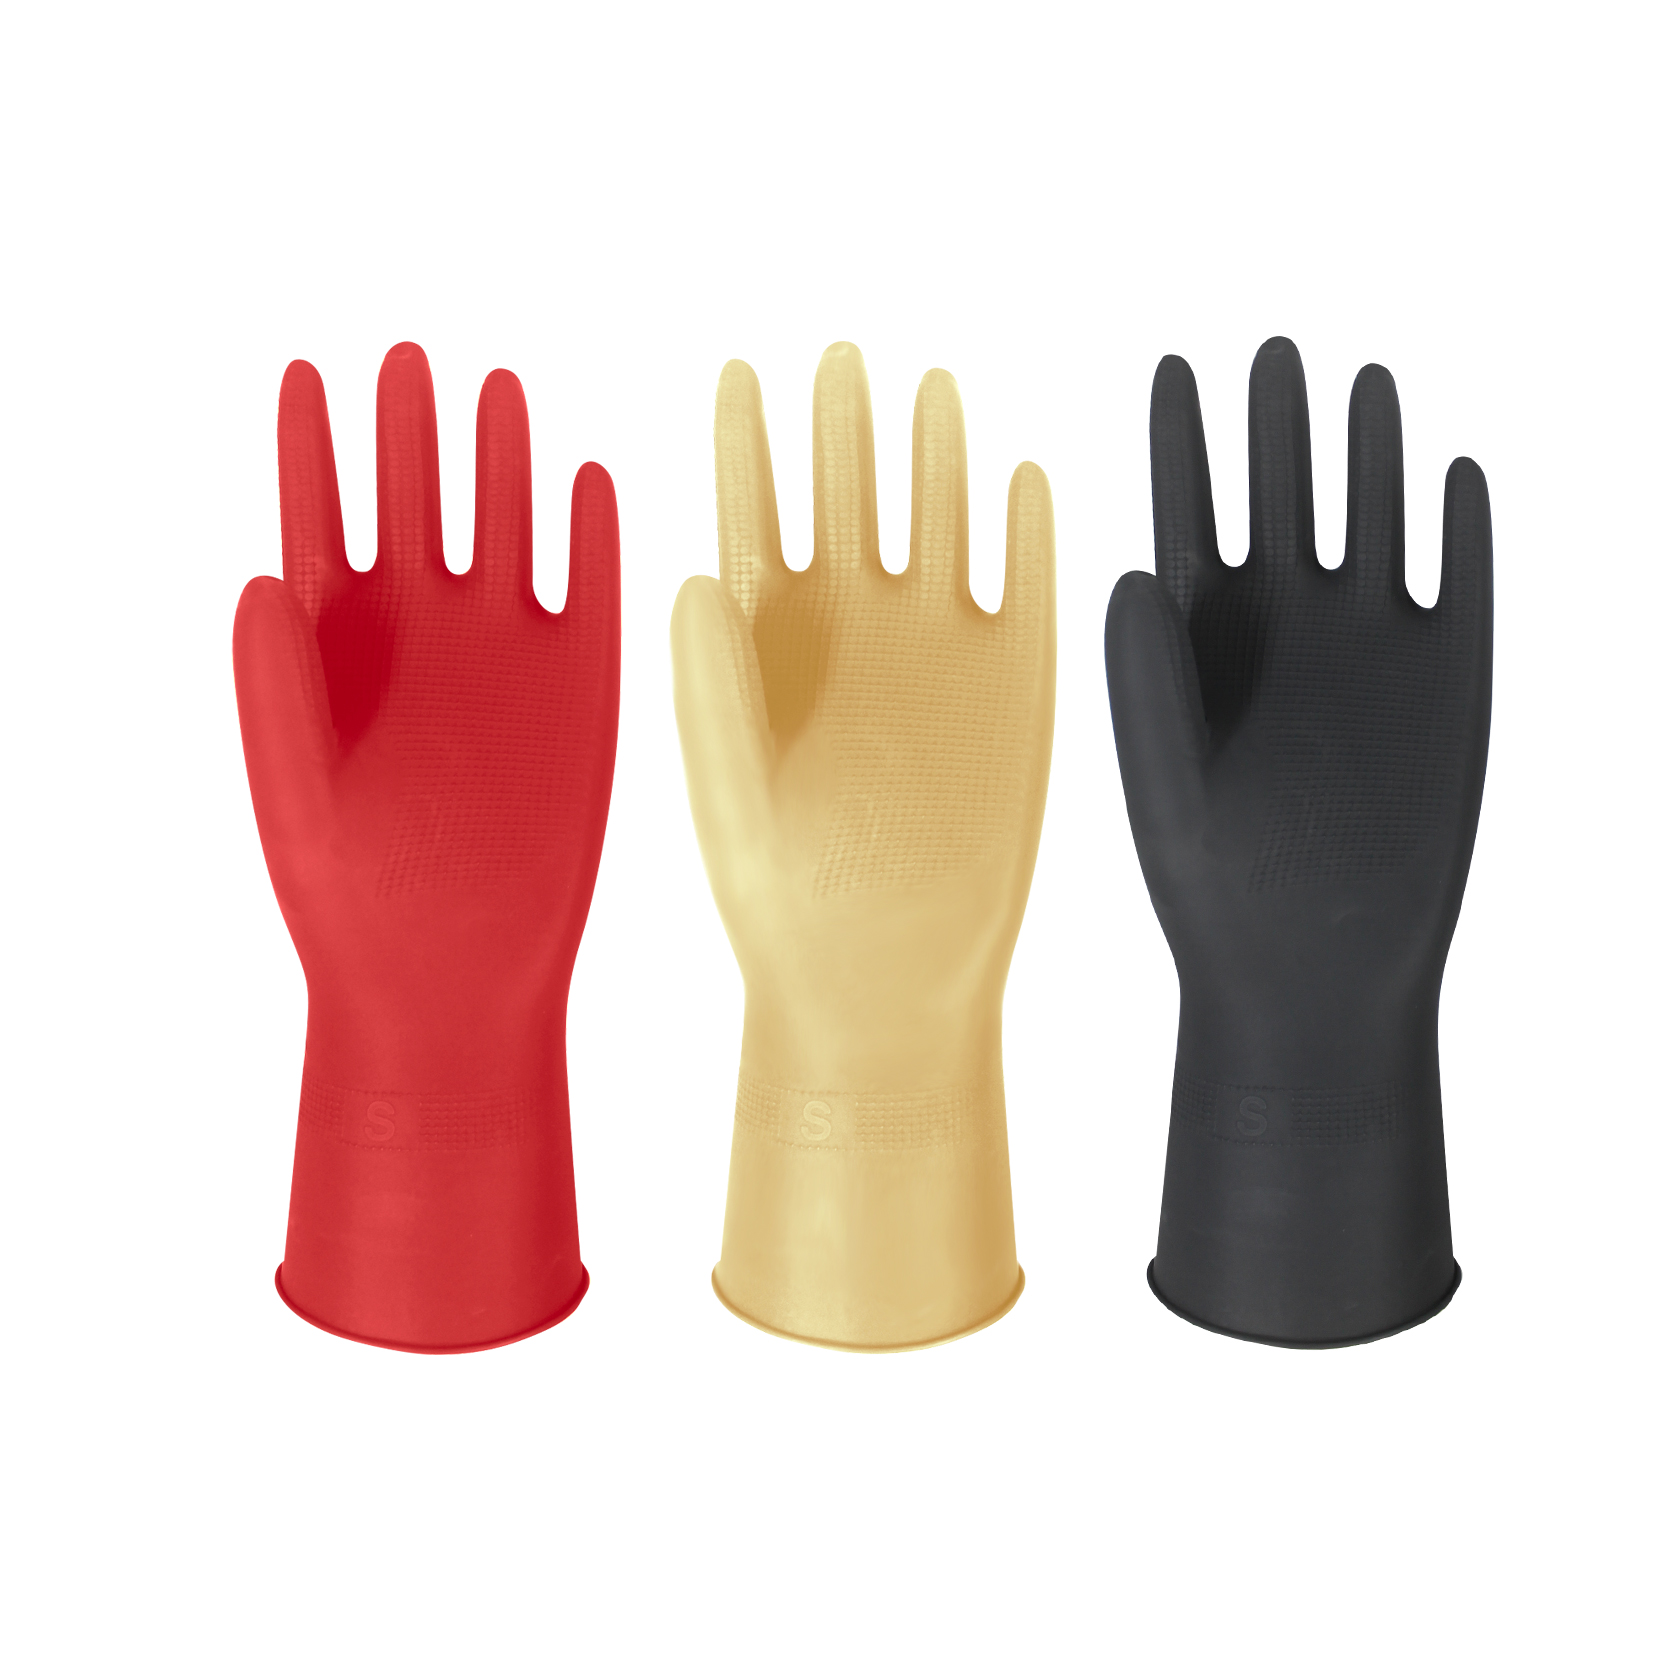 Latex Household Rolled Cuff Gloves sarung tangan getah pendek untuk Membersihkan sarung tangan basuh pinggan mangkuk